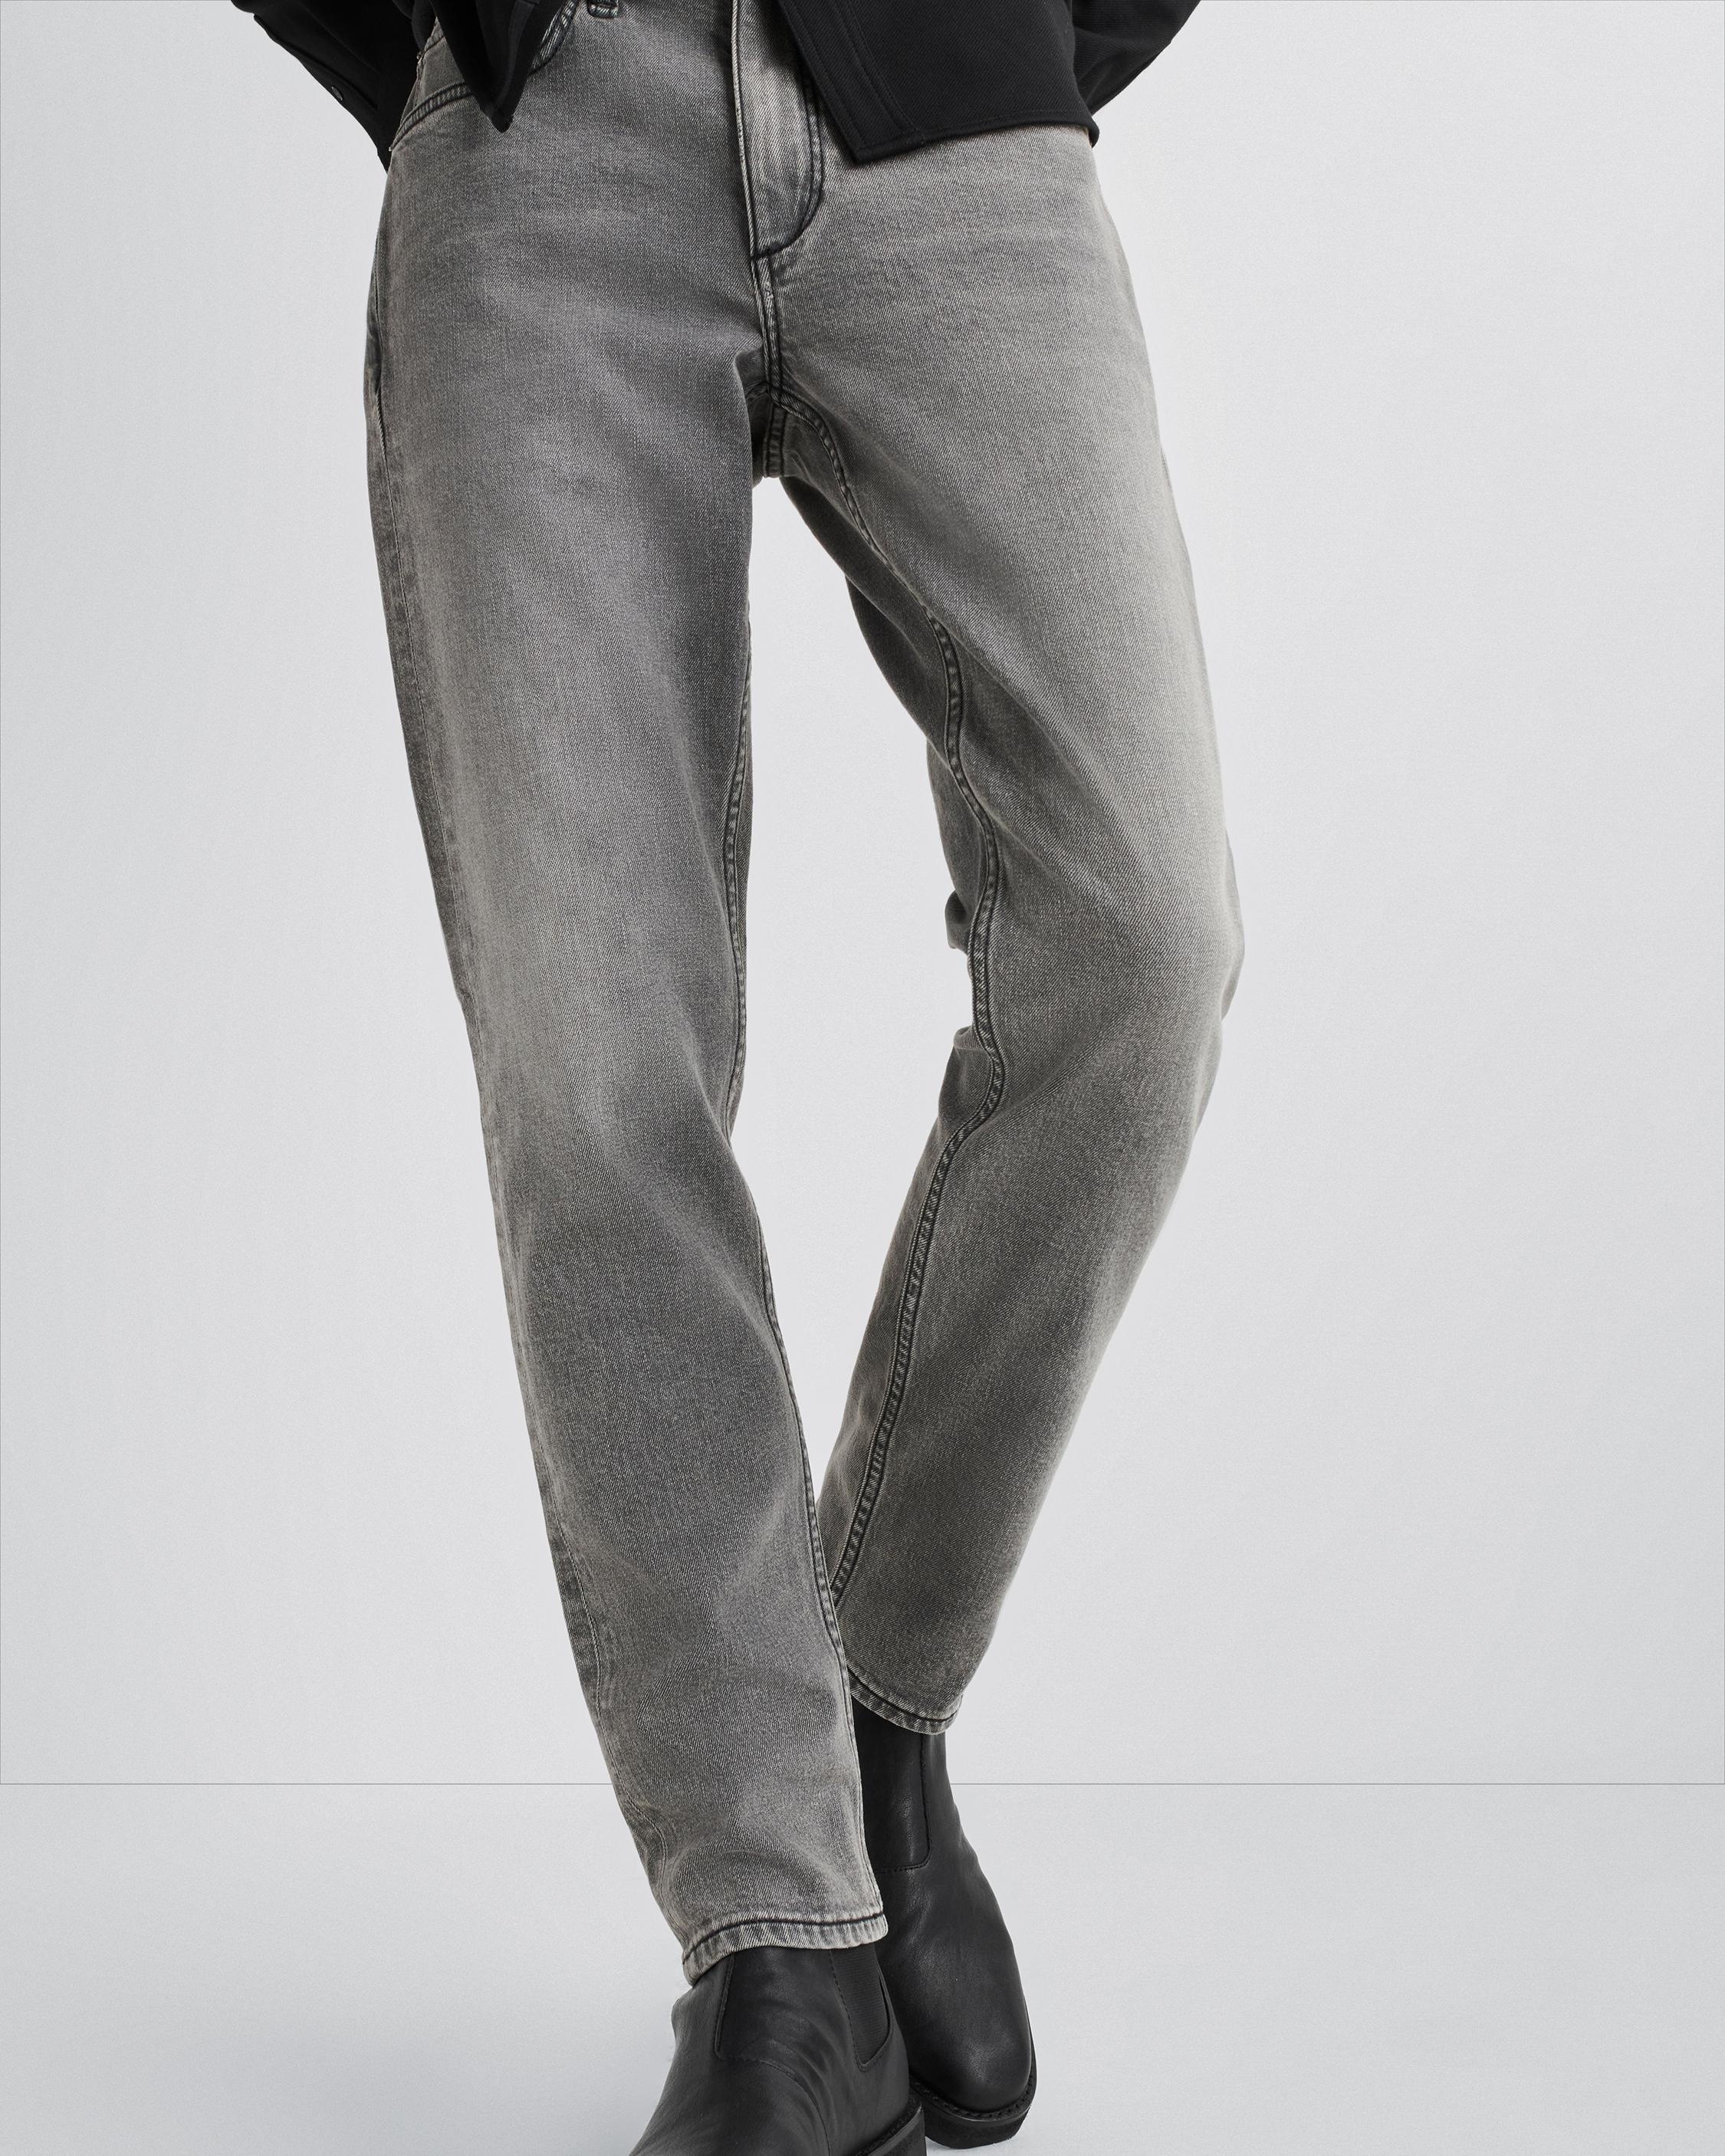 Fit 2 - Greyson
Slim Fit Light Grey Authentic Stretch Jean - 6